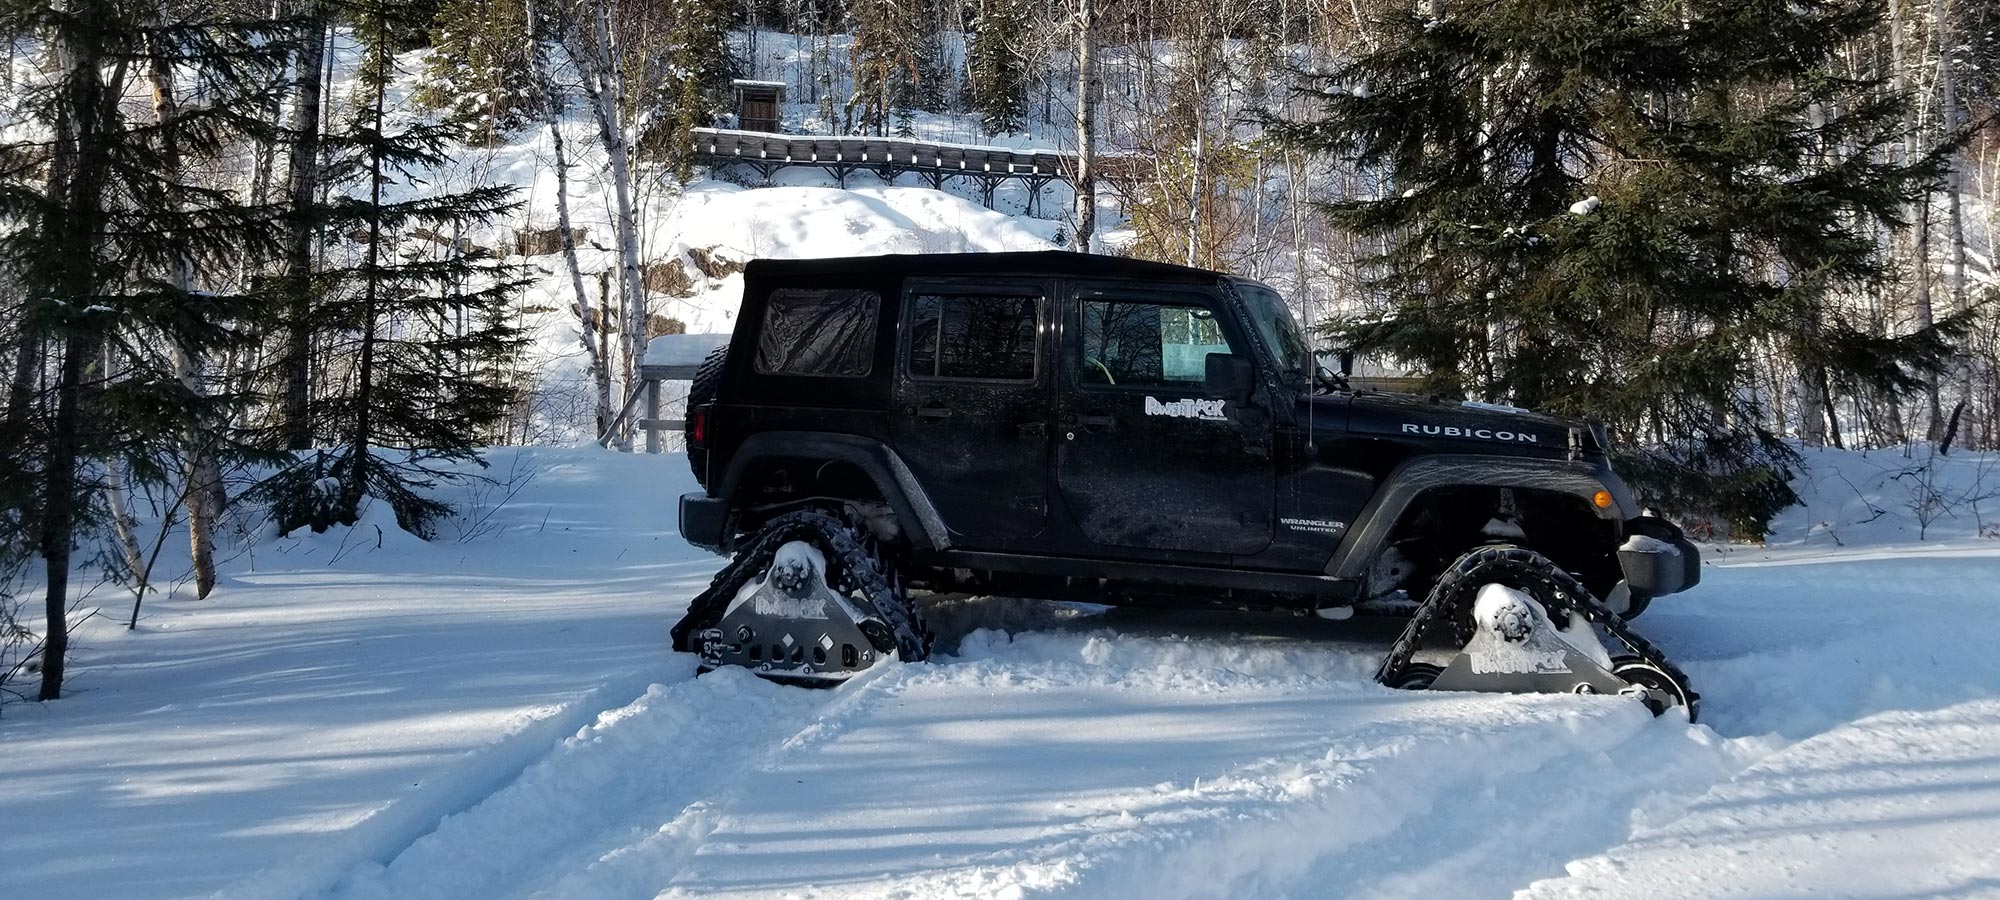 Arriba 101+ imagen snow tracks for jeep wrangler